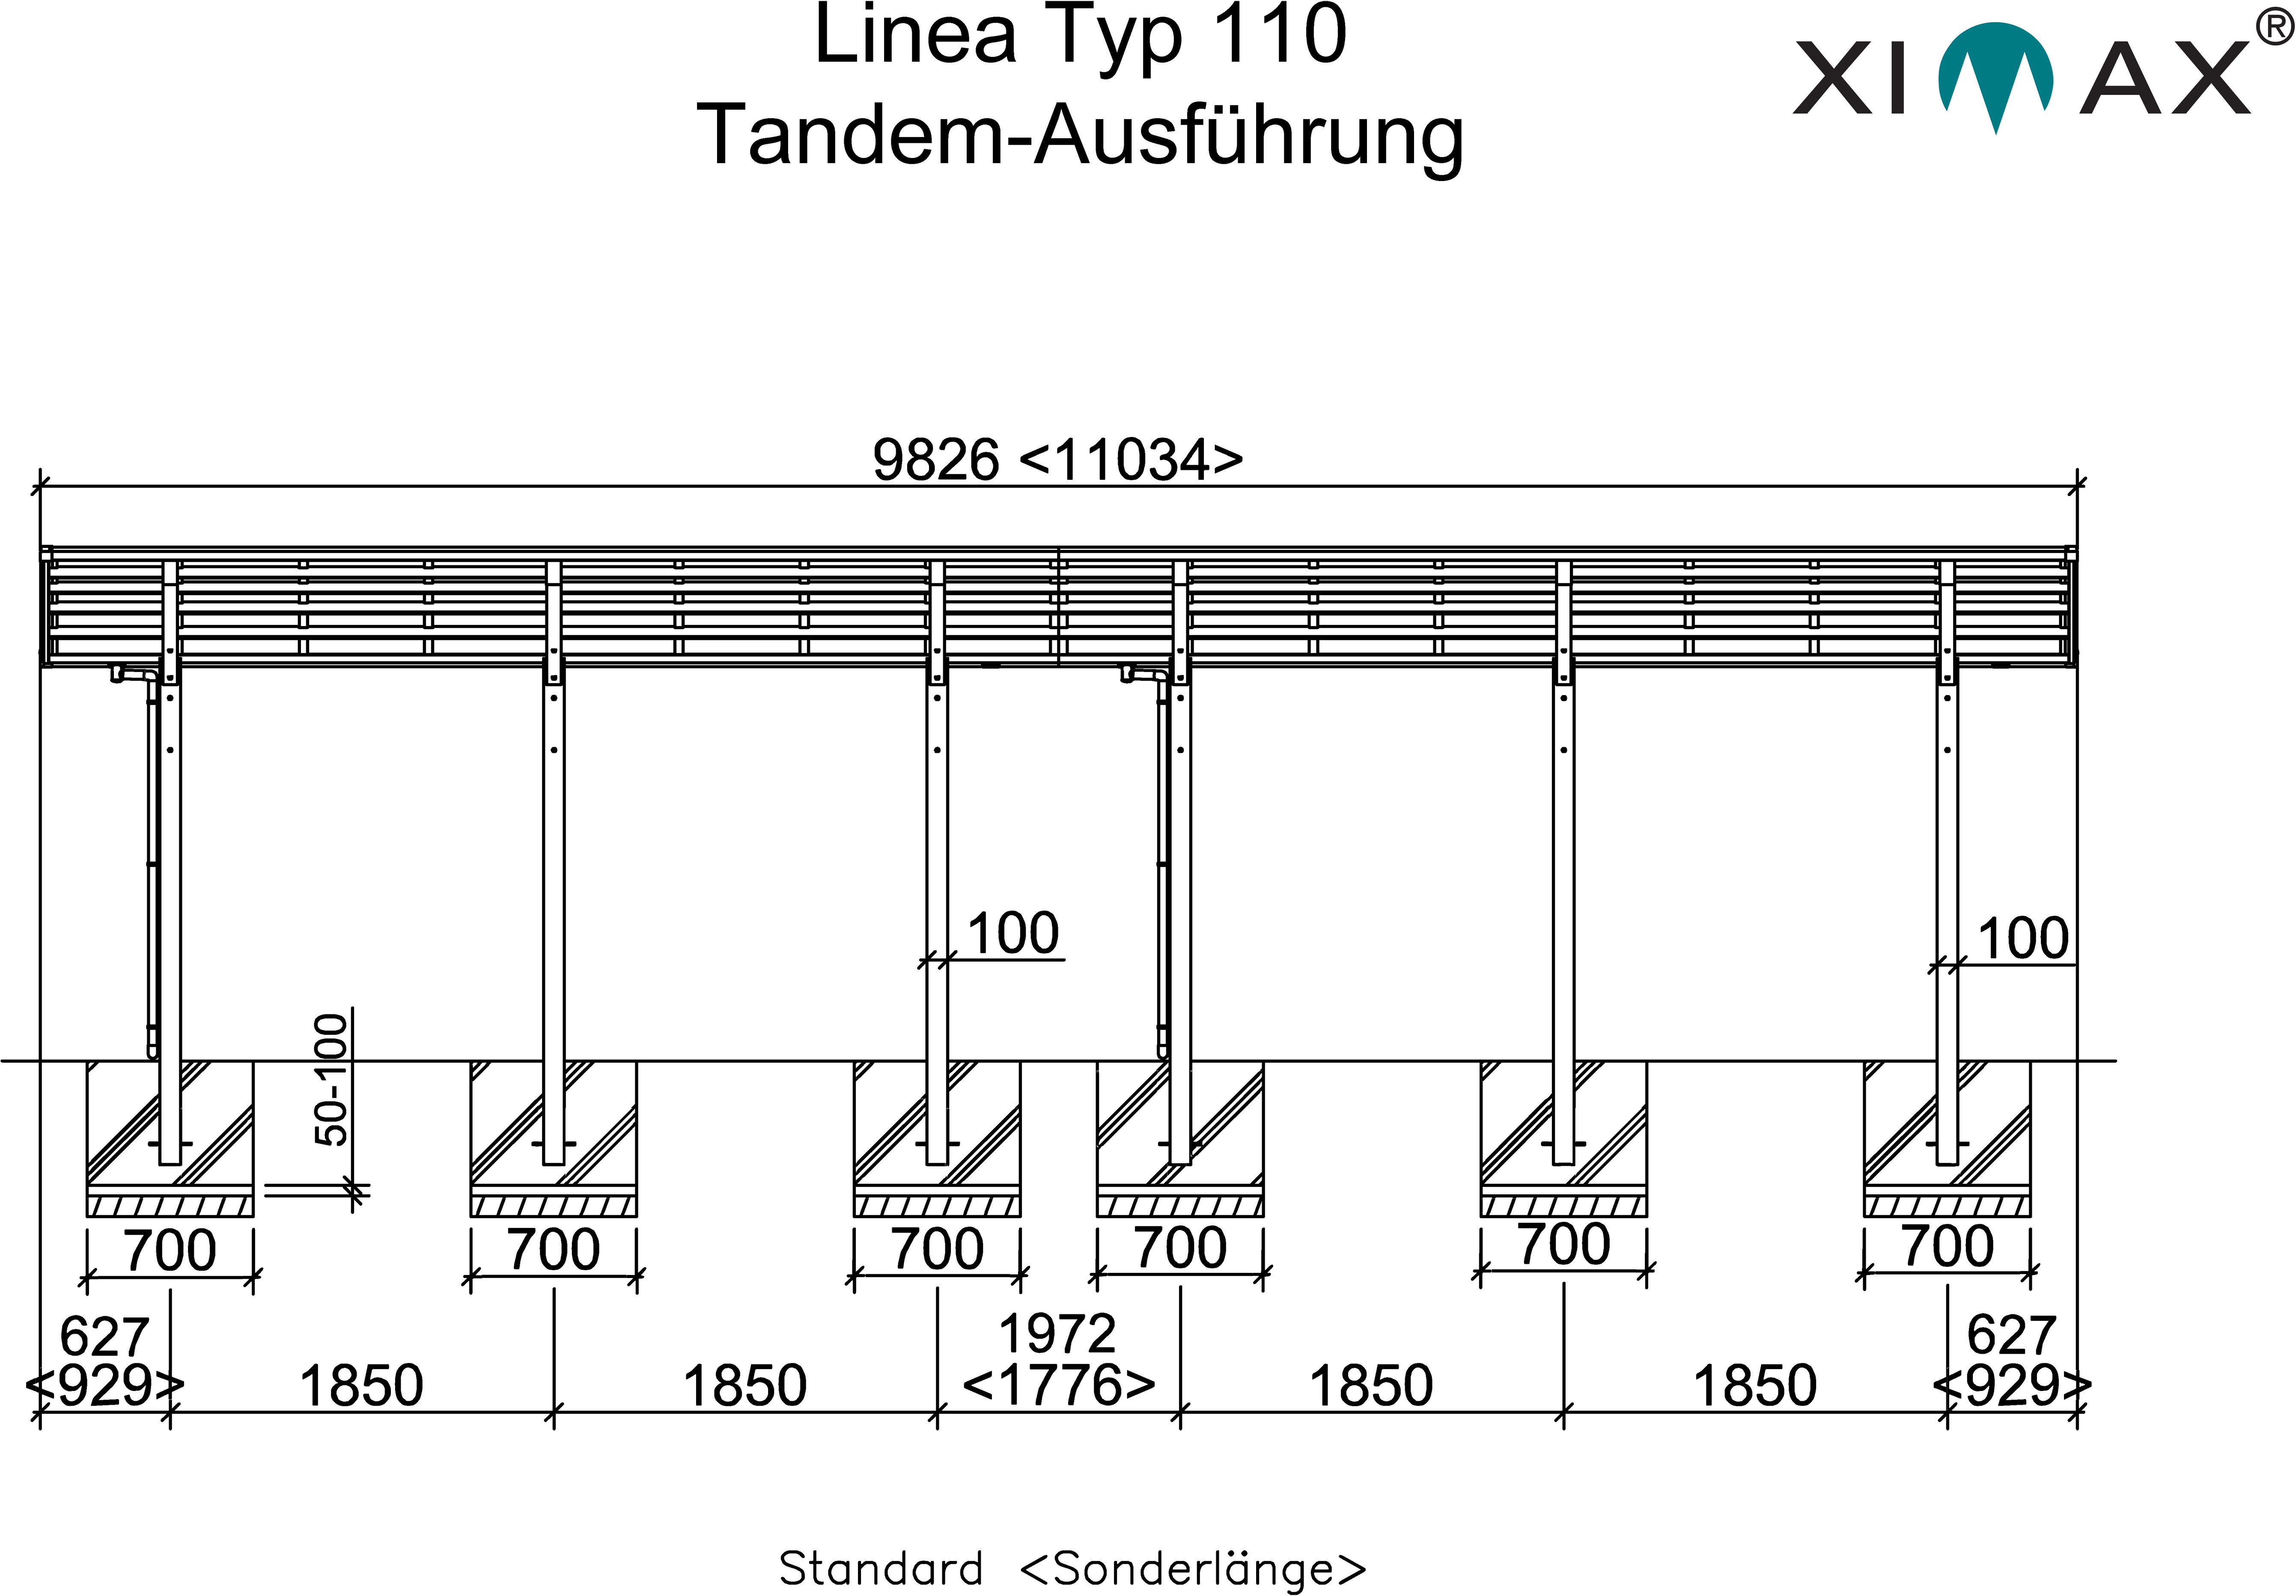 Ximax Alu Doppelcarport Linea Tandem Bronze 983 273 OBI x Sonderfertigung cm kaufen bei 110 Typ